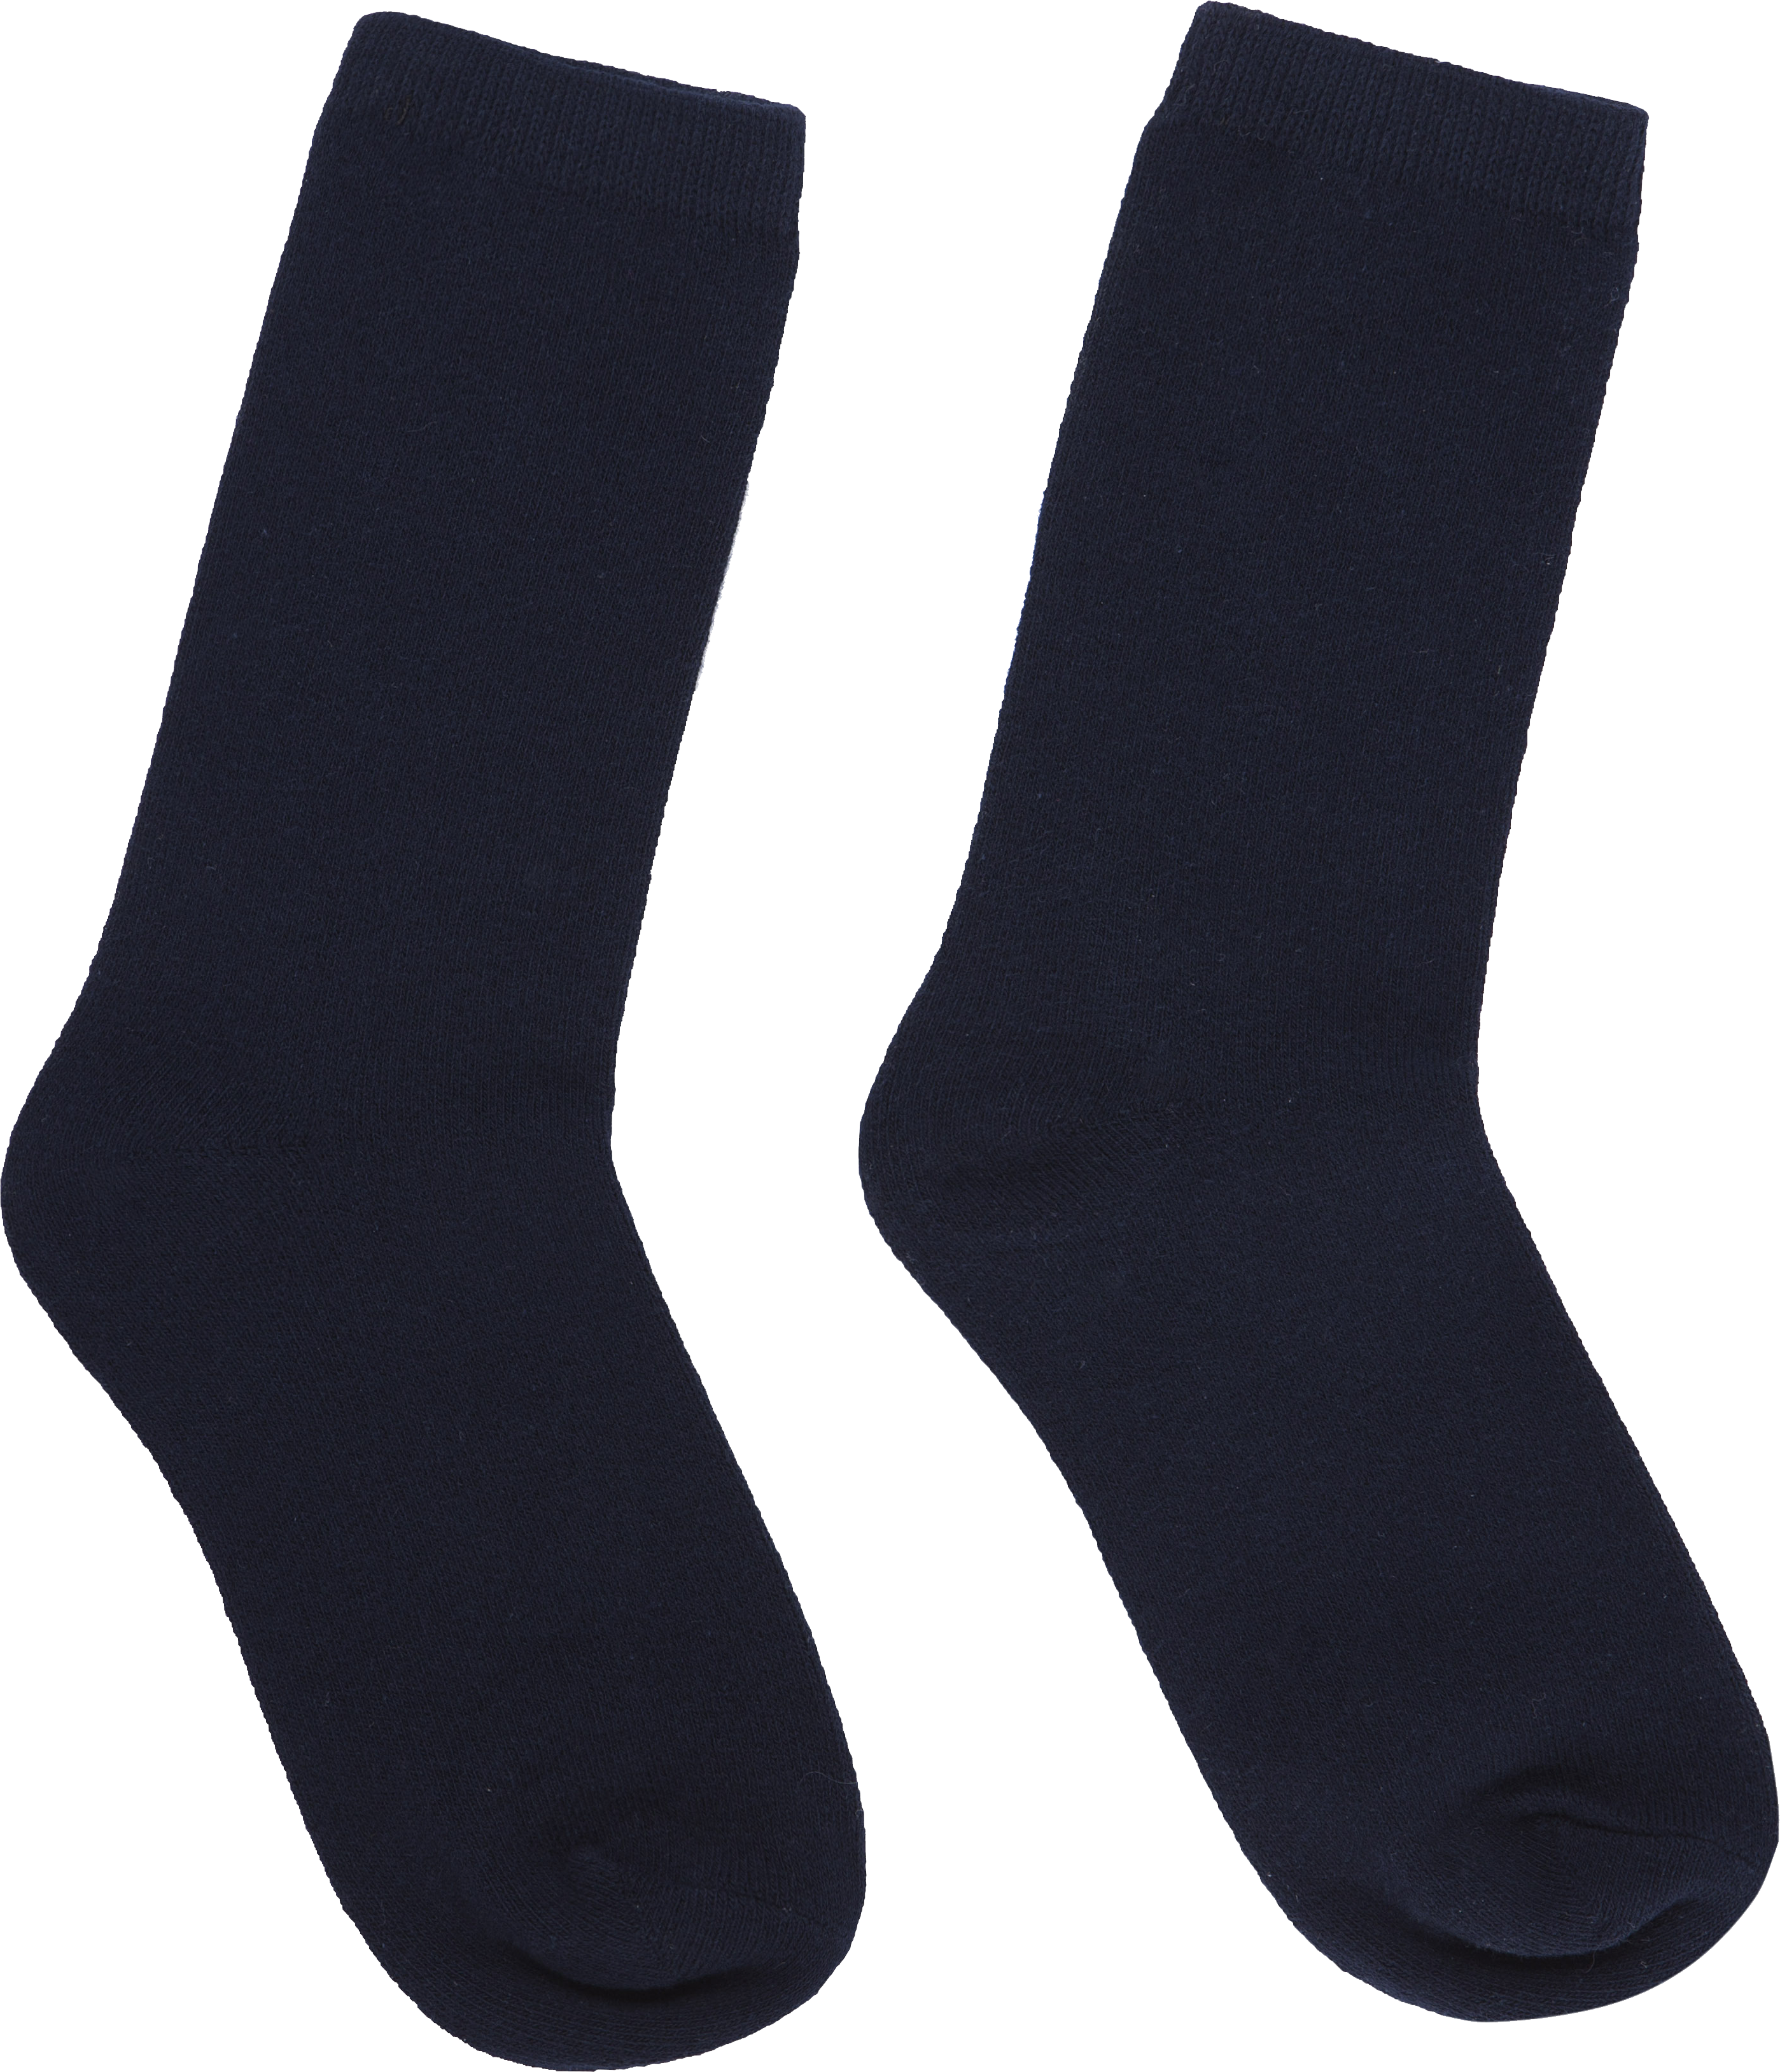 Black Socks Png Image - Socks, Transparent background PNG HD thumbnail